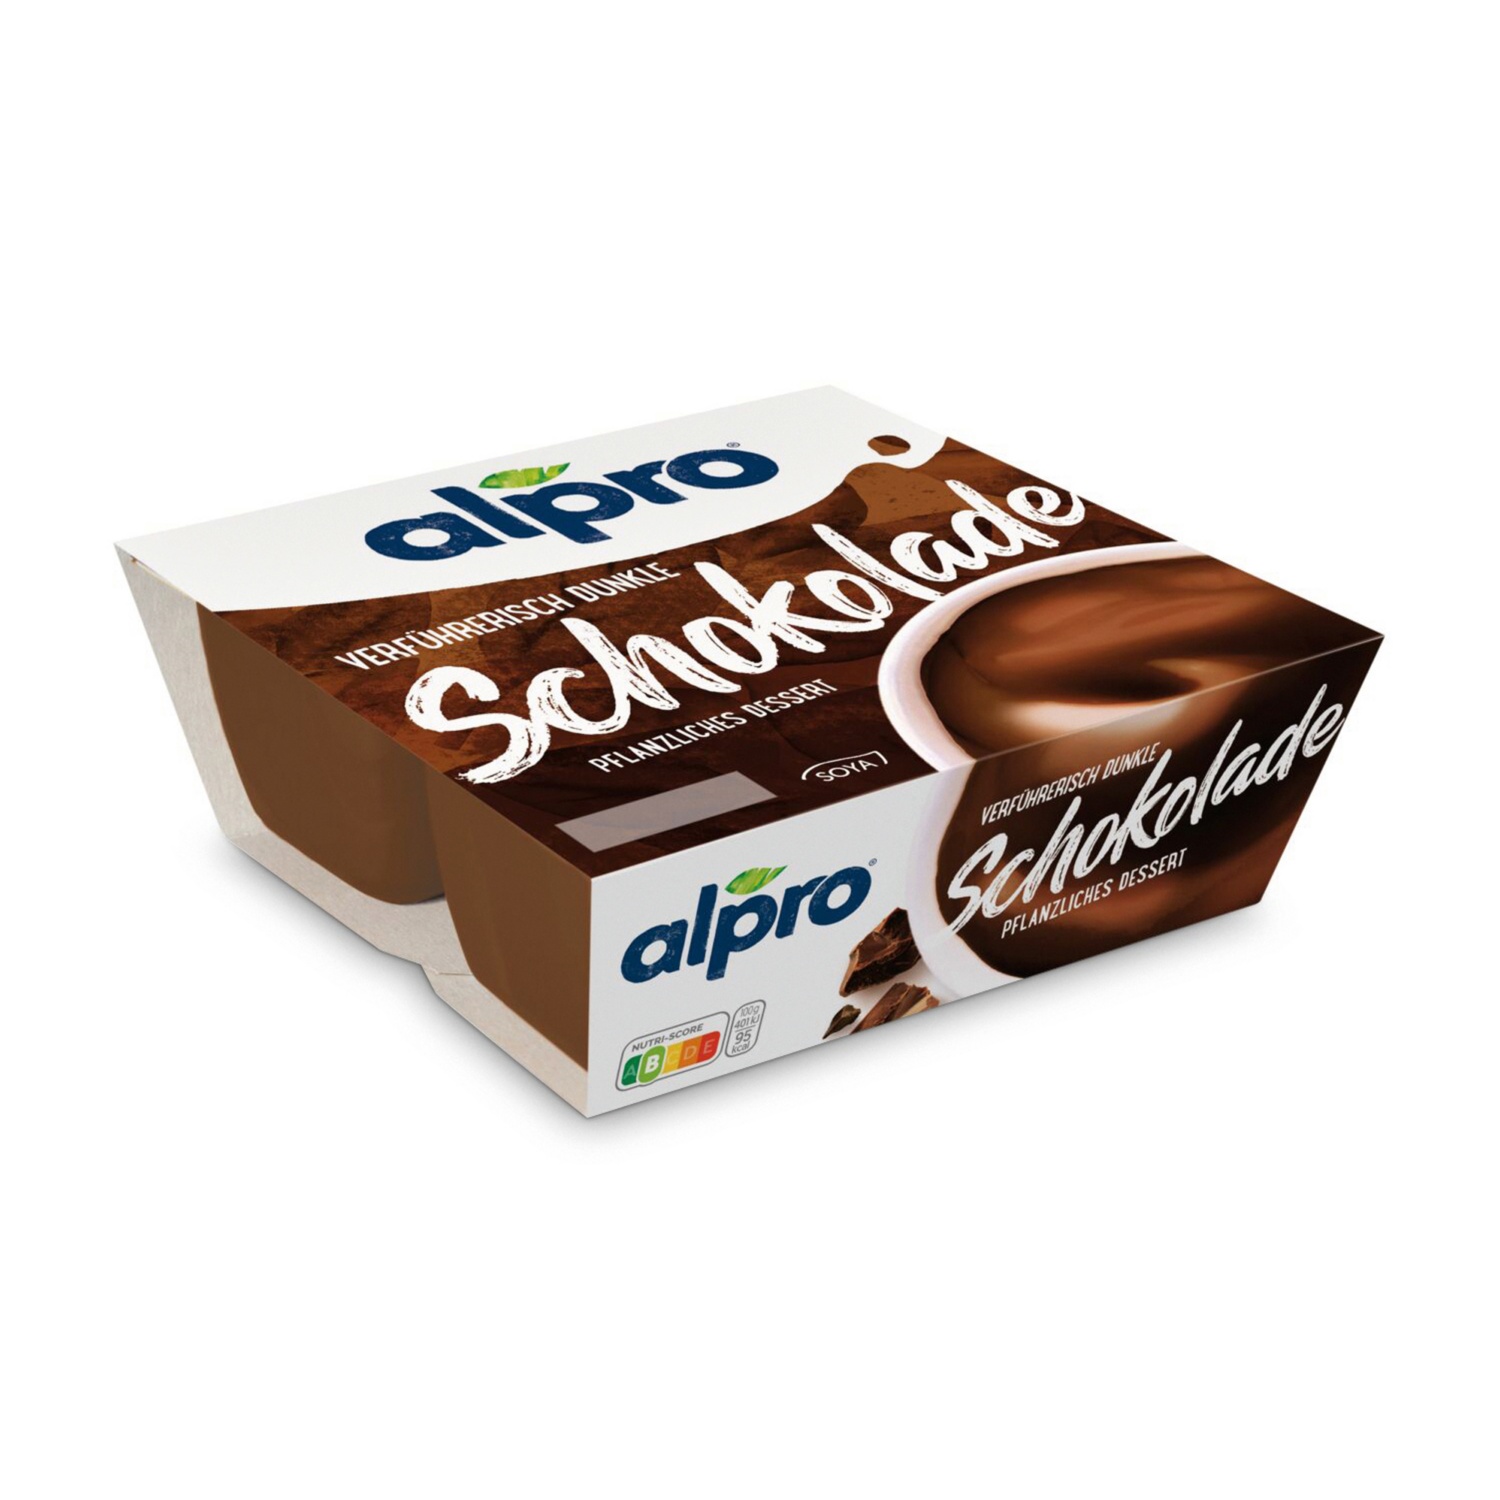 ALPRO Sojadessert, Dunkle Schokolade